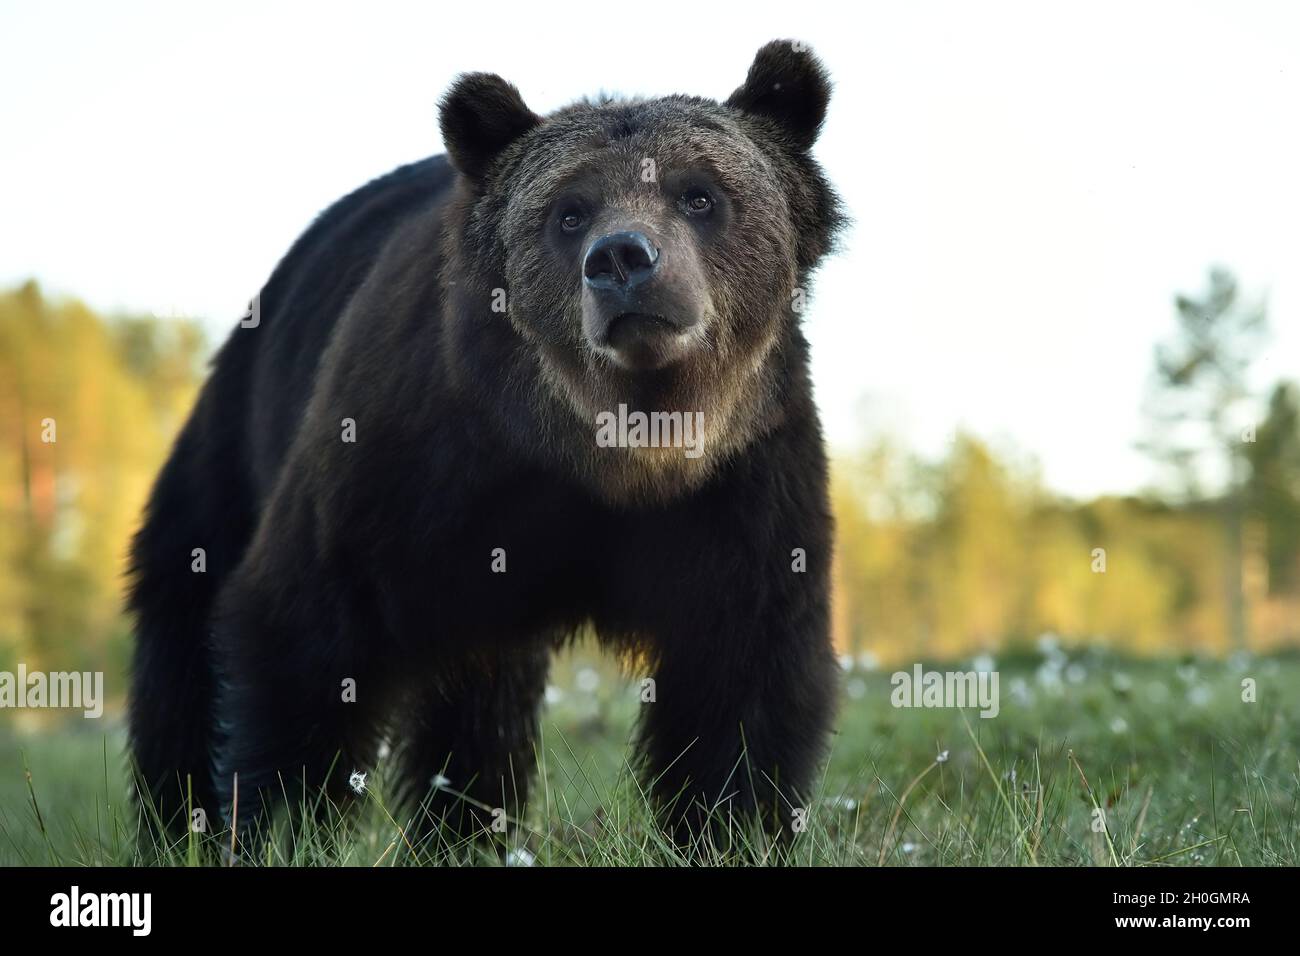 Brown bear portrait in summer scenery Stock Photo